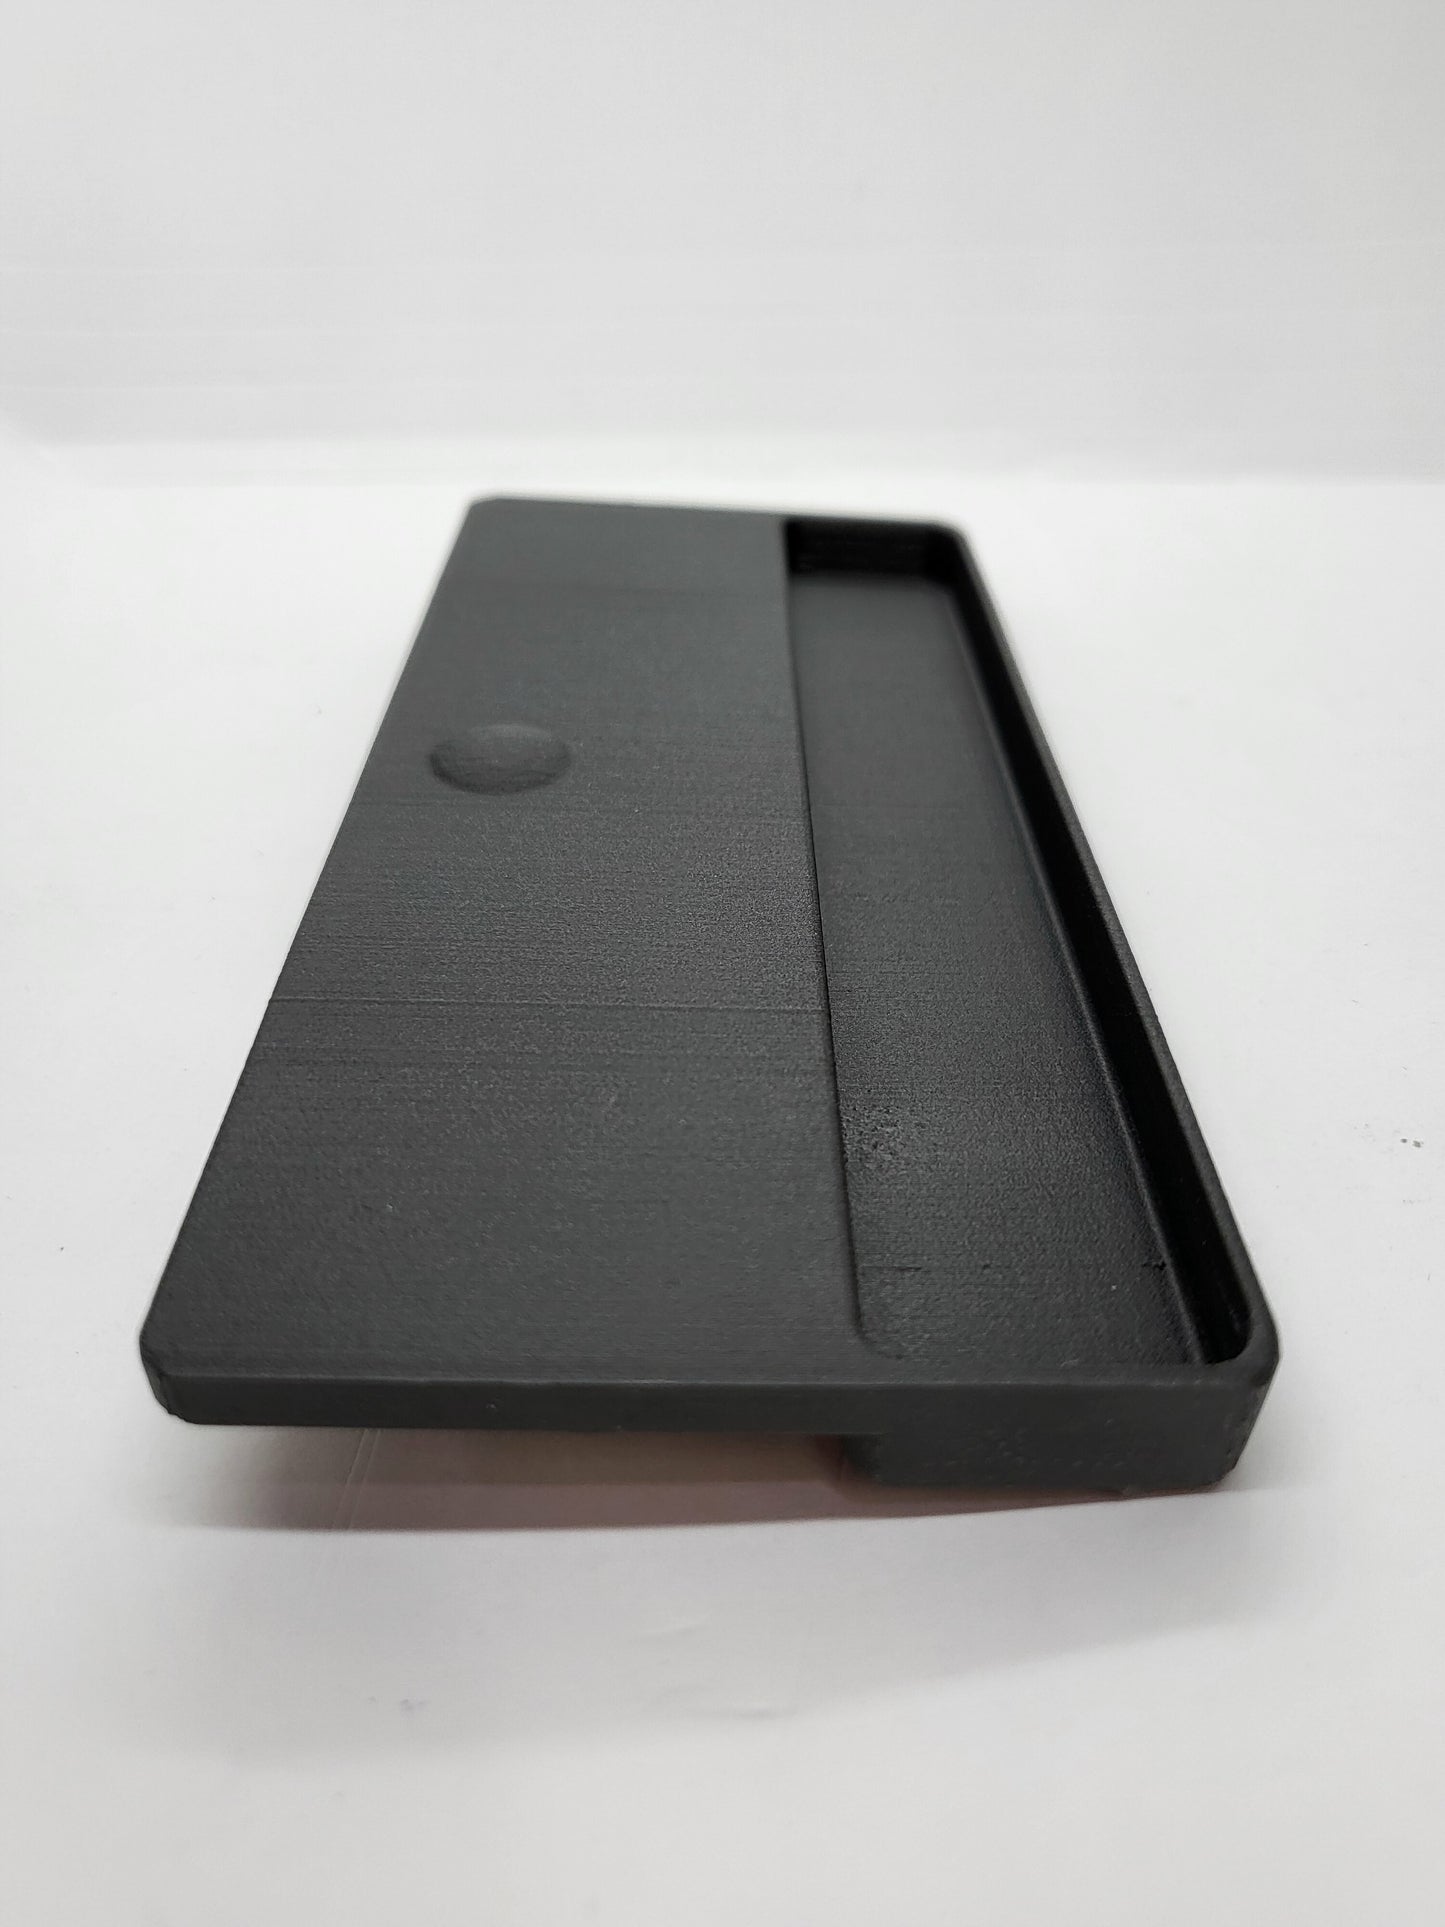 External Sliding Door Handle Low Profile - 3D Printed